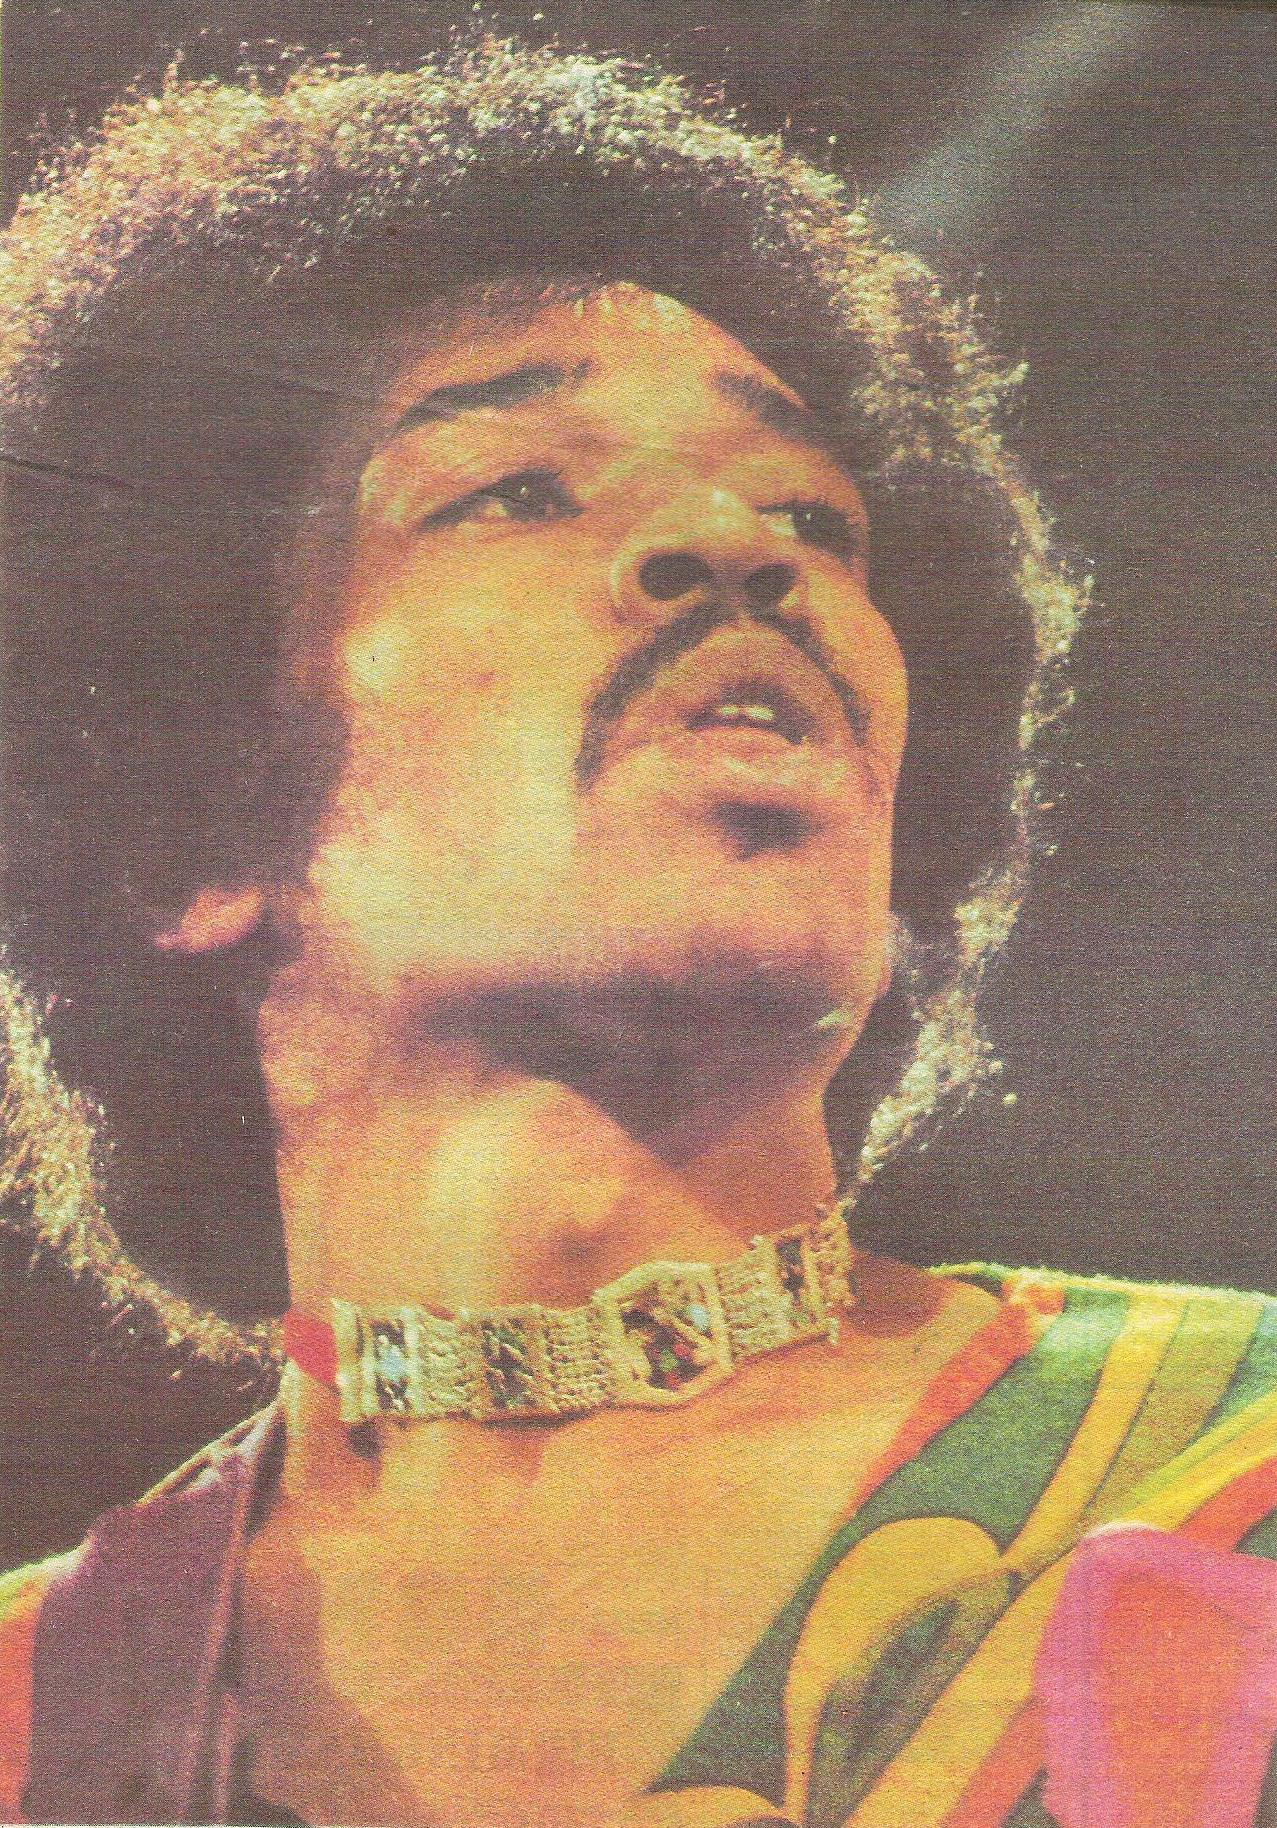 Blue Wild Angel: Jimi Hendrix Live At The Isle Of Wight (2002) - Page 2 A2272678cd8aca9f2ebf82138257735c